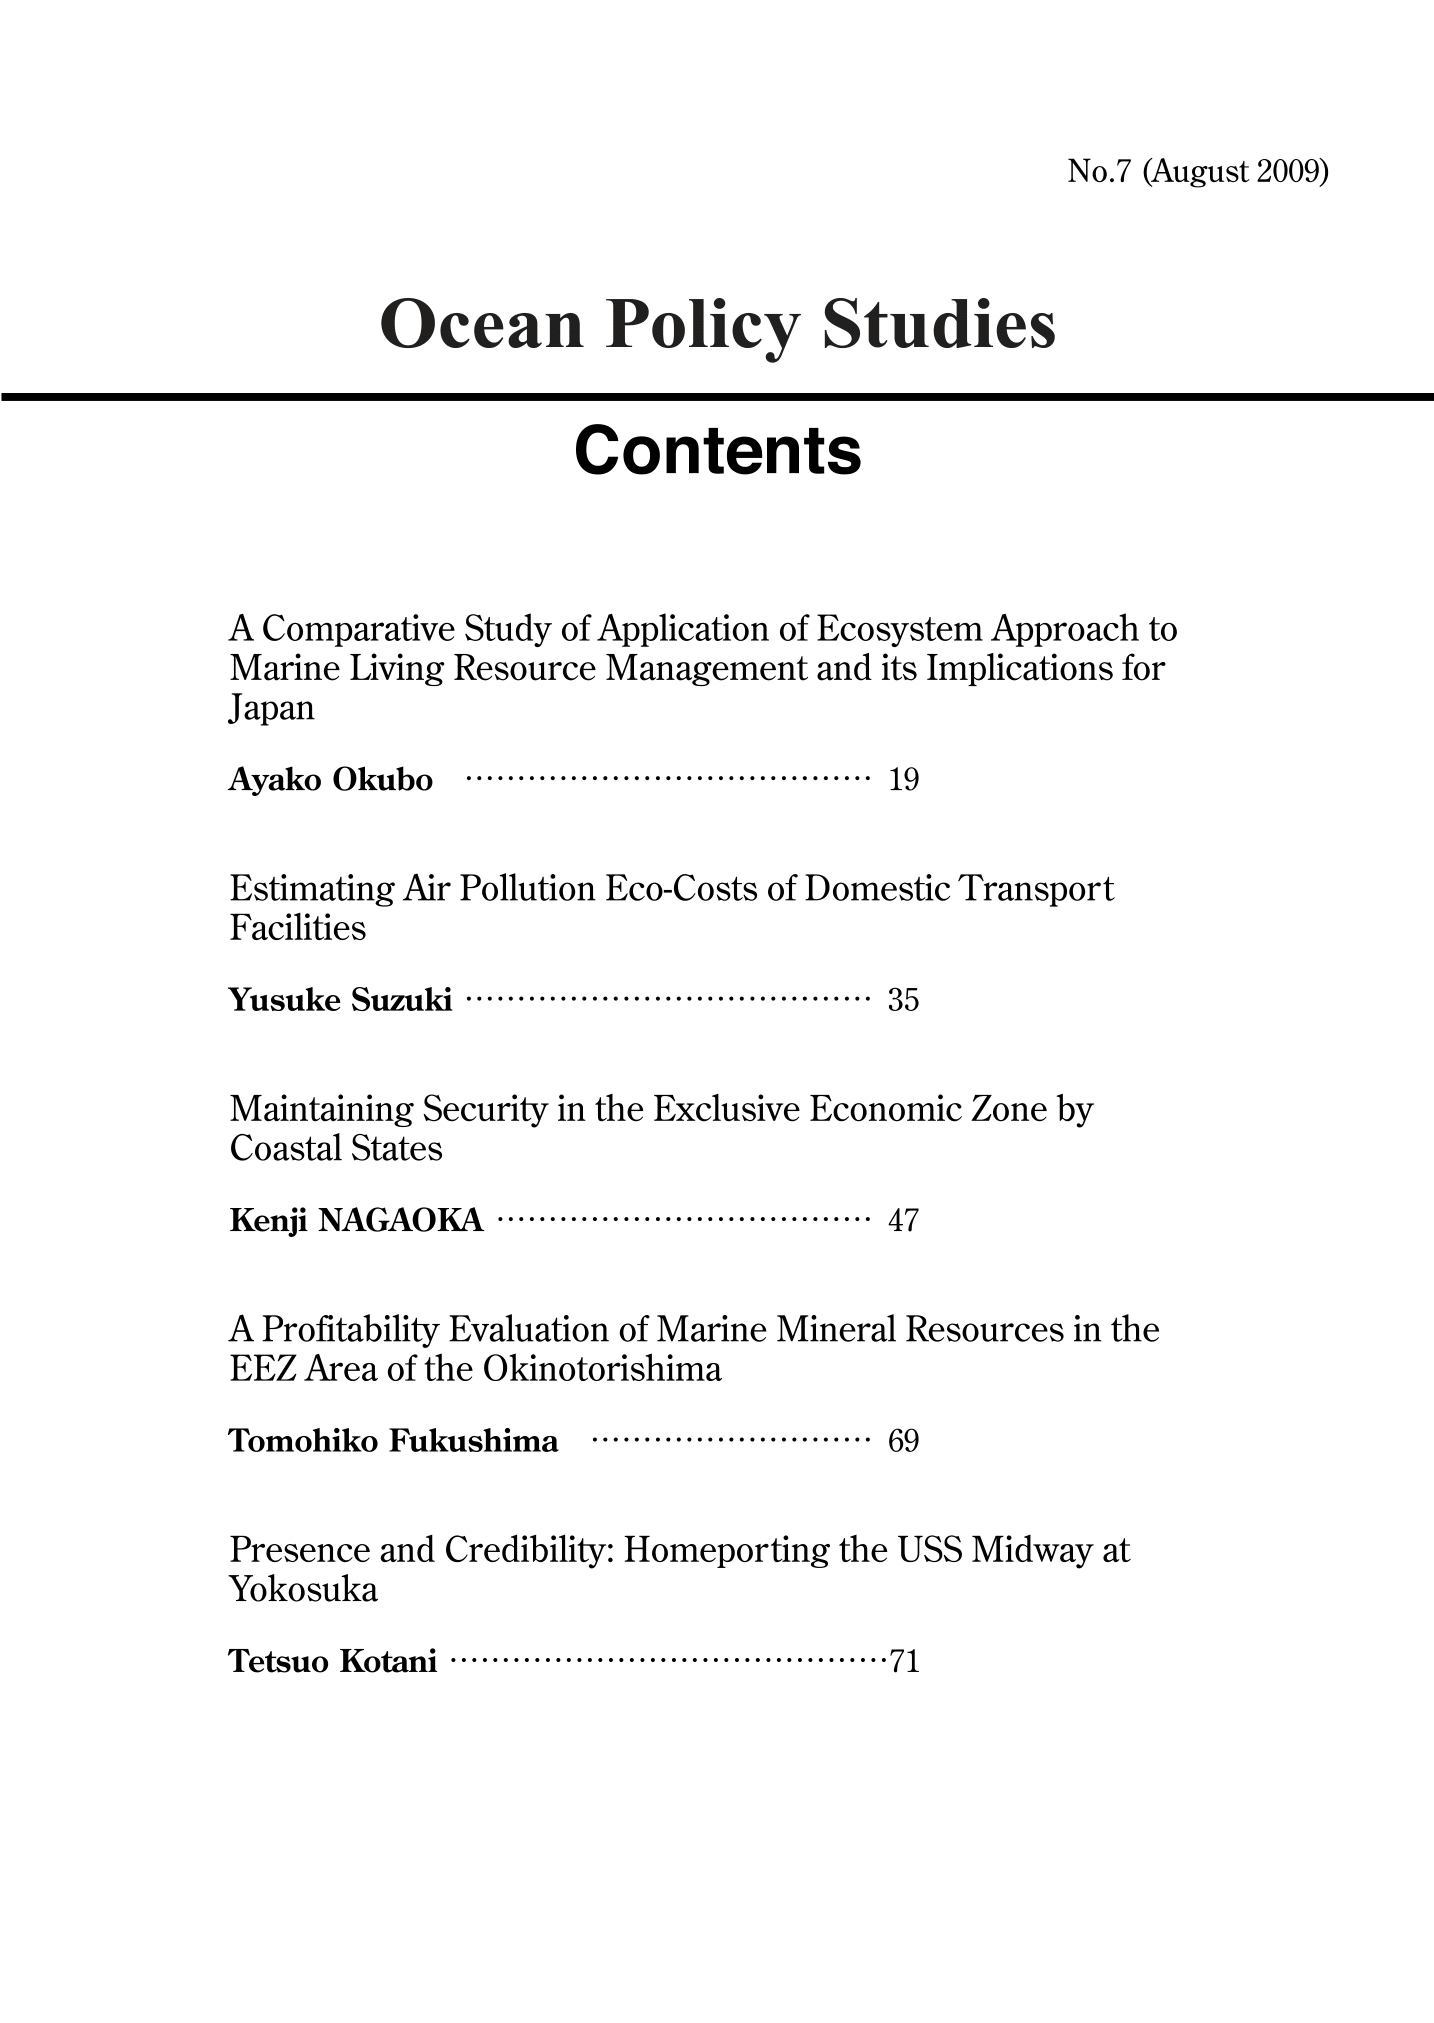 Ocean Policy Studies No.7